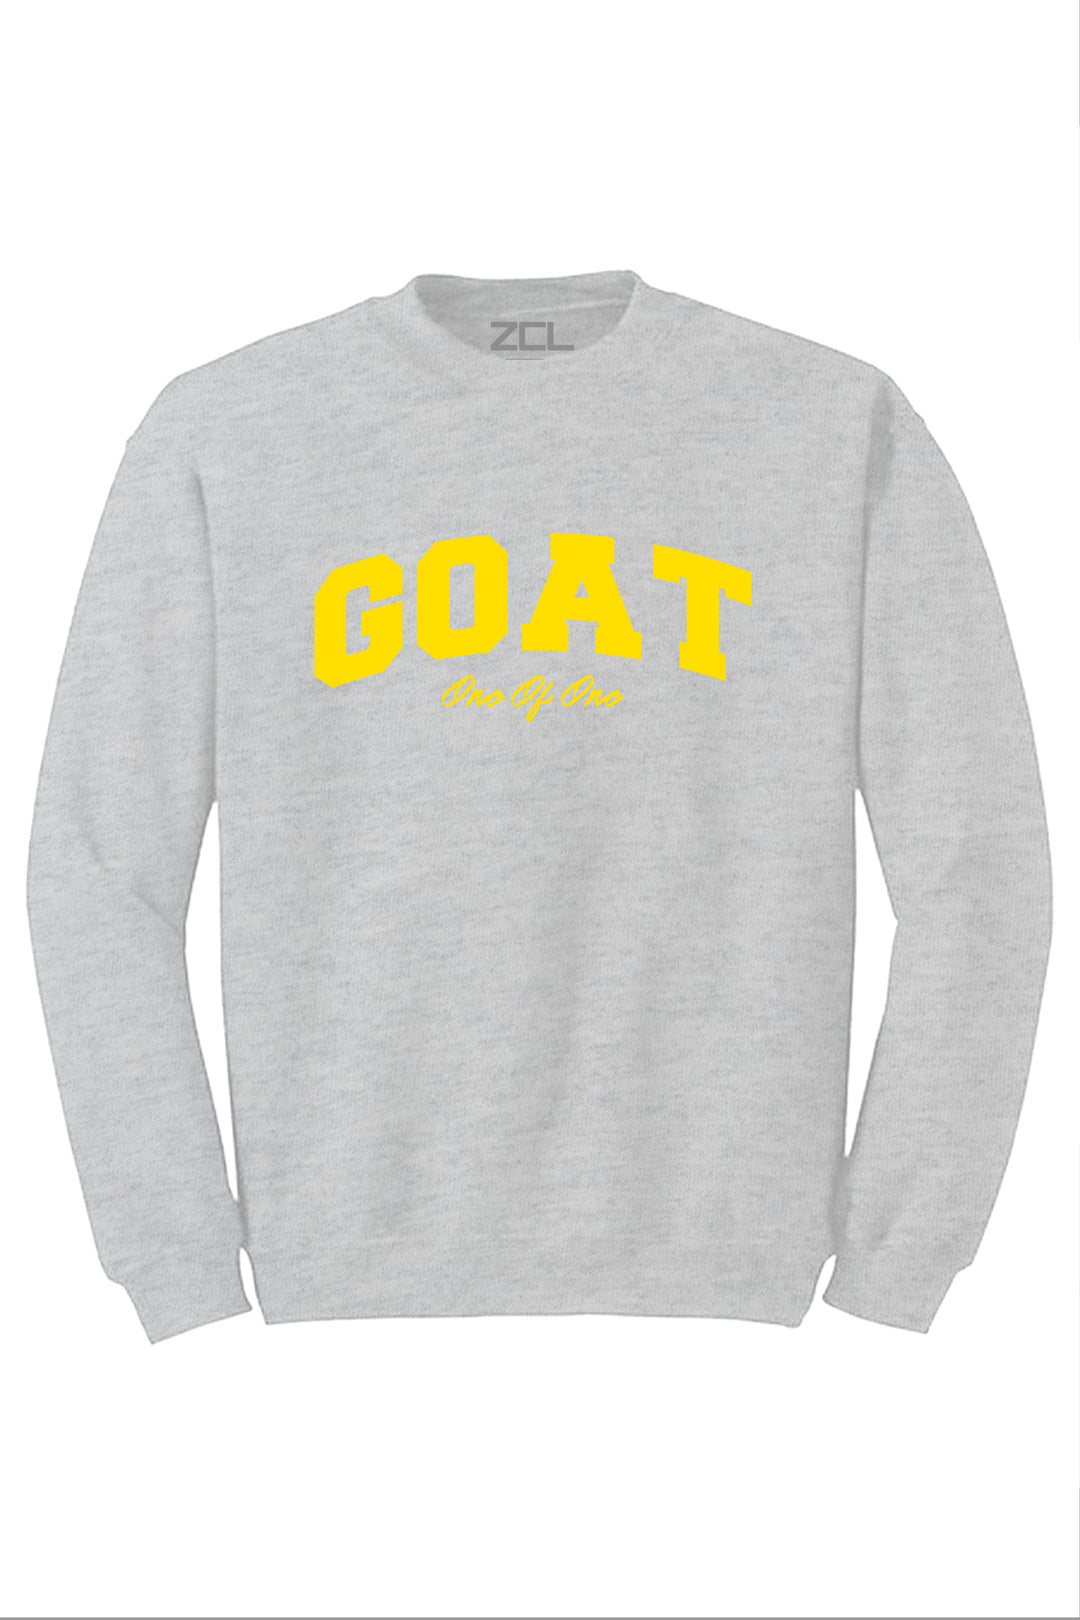 Goat Crewneck Sweatshirt (Yellow Logo) - Zamage